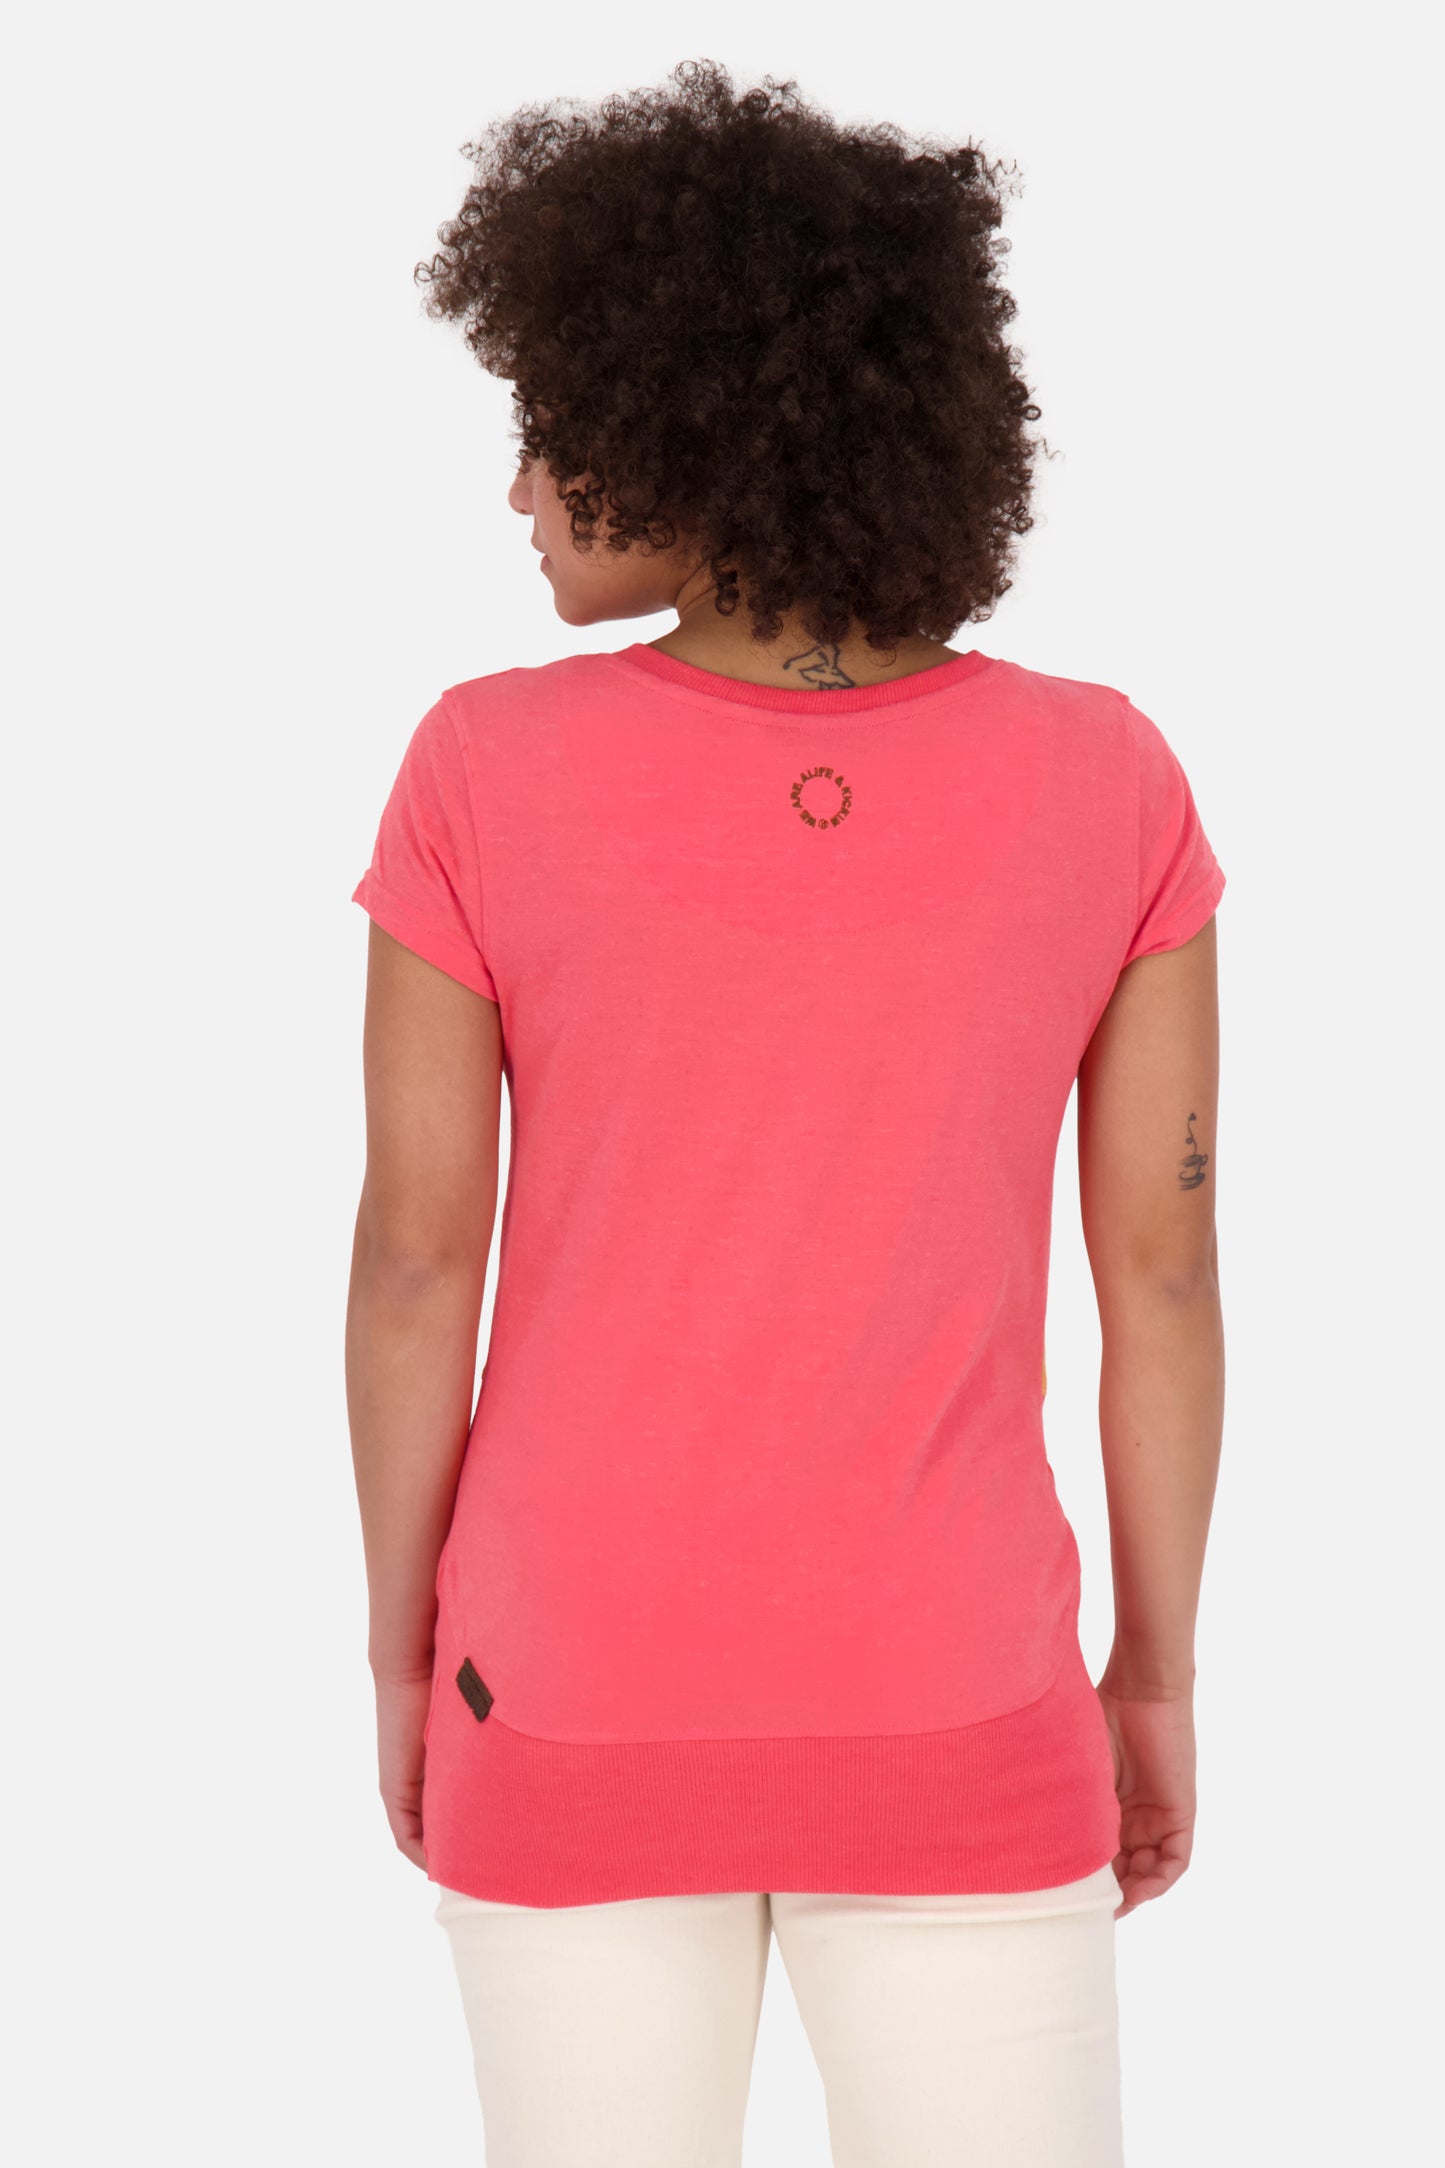 ClementinaAK A T-Shirt Damen - Trendpiece für den Sommer Rot